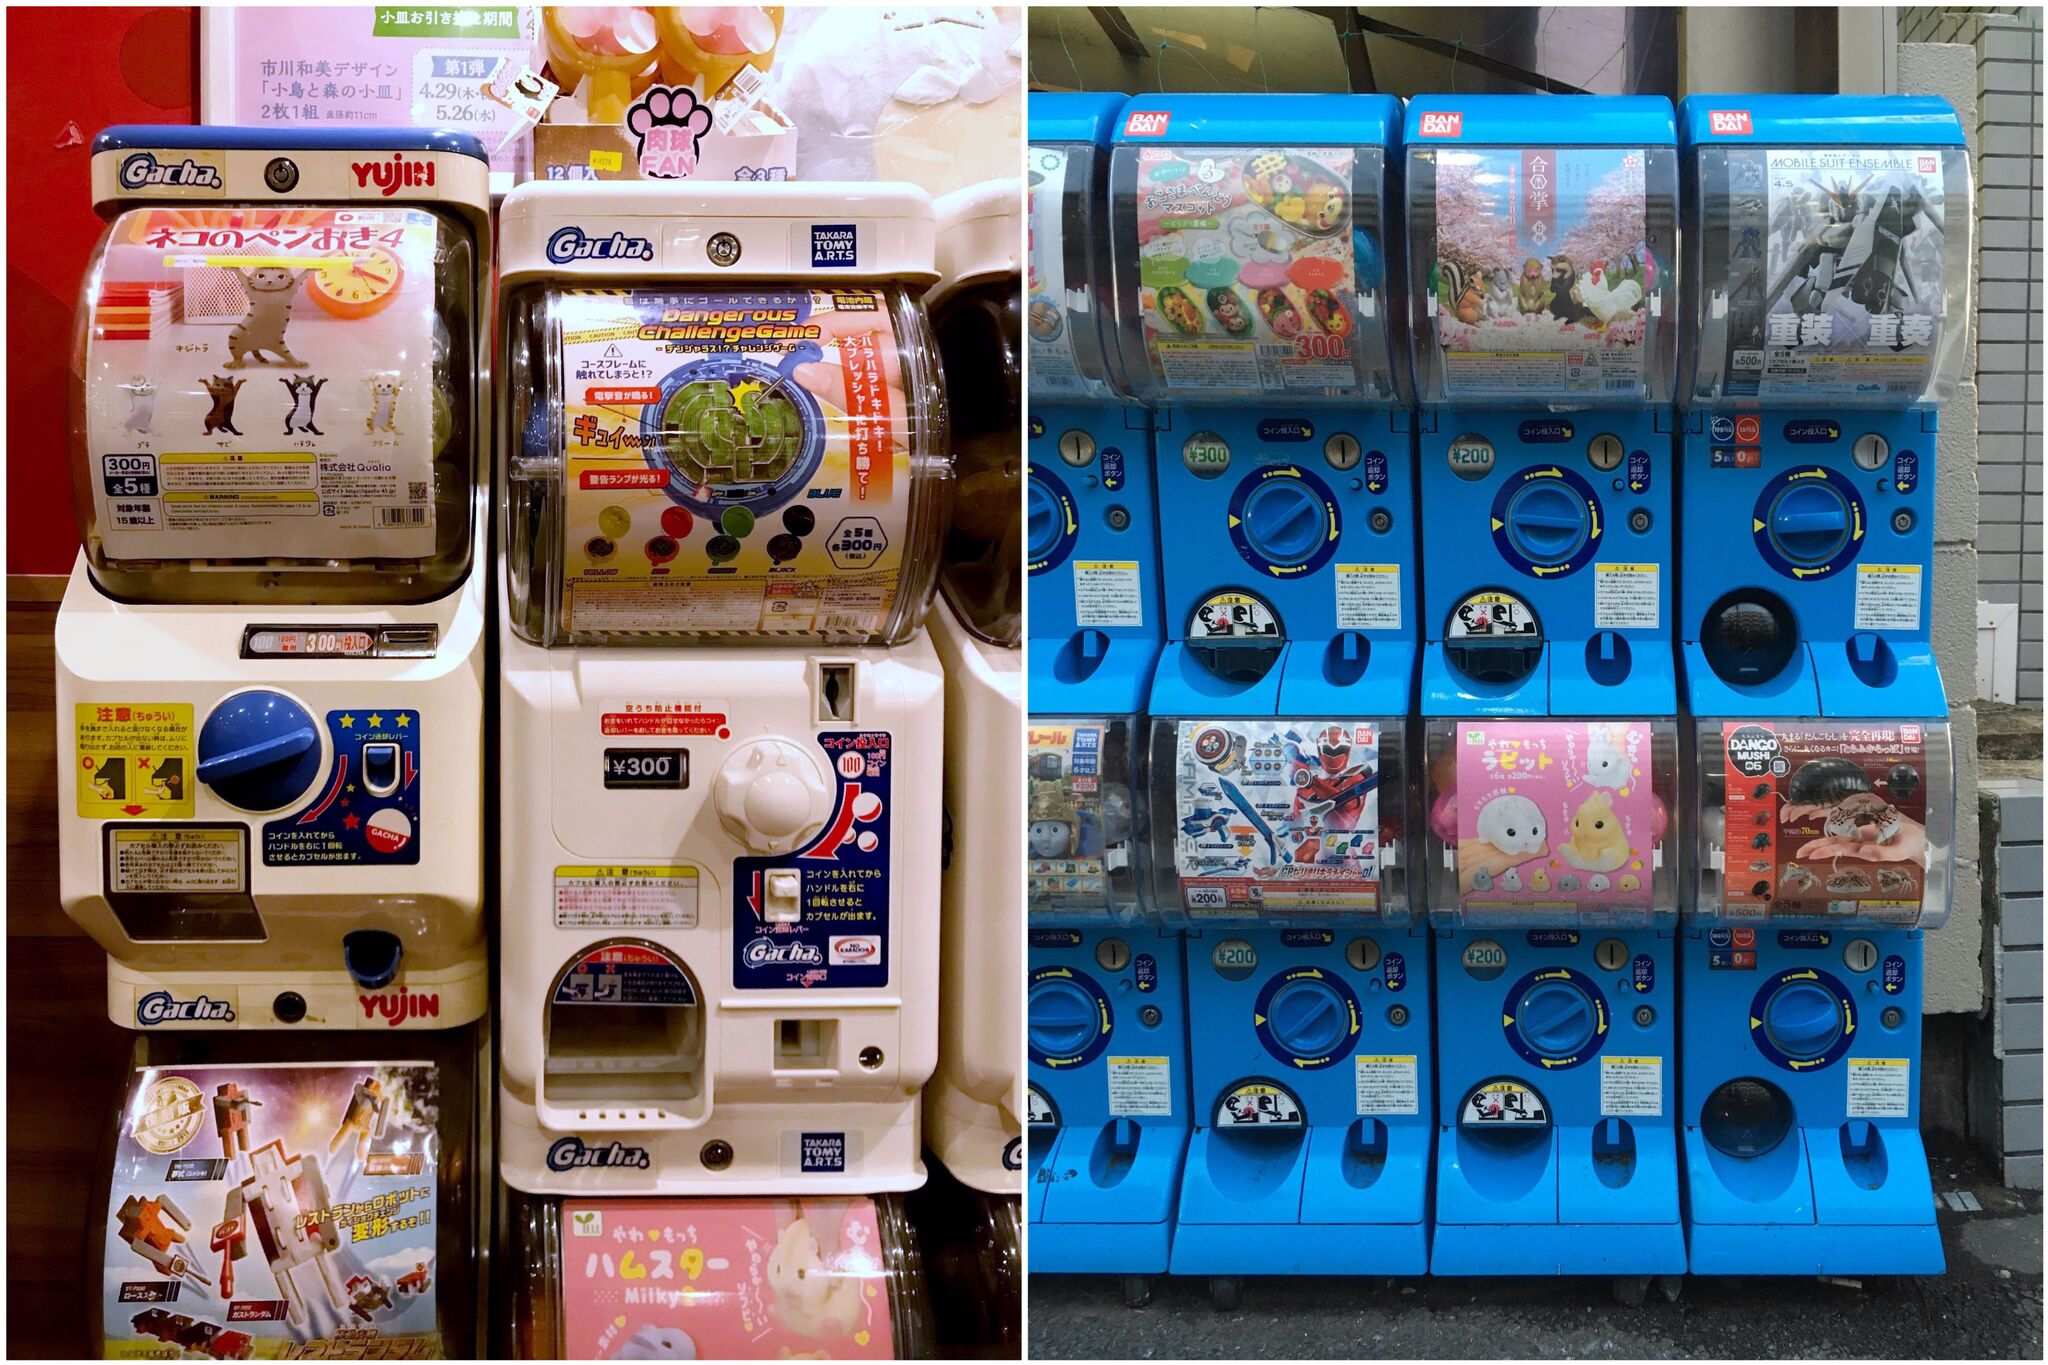 Gacha Gacha or Gachapon machines in Japan